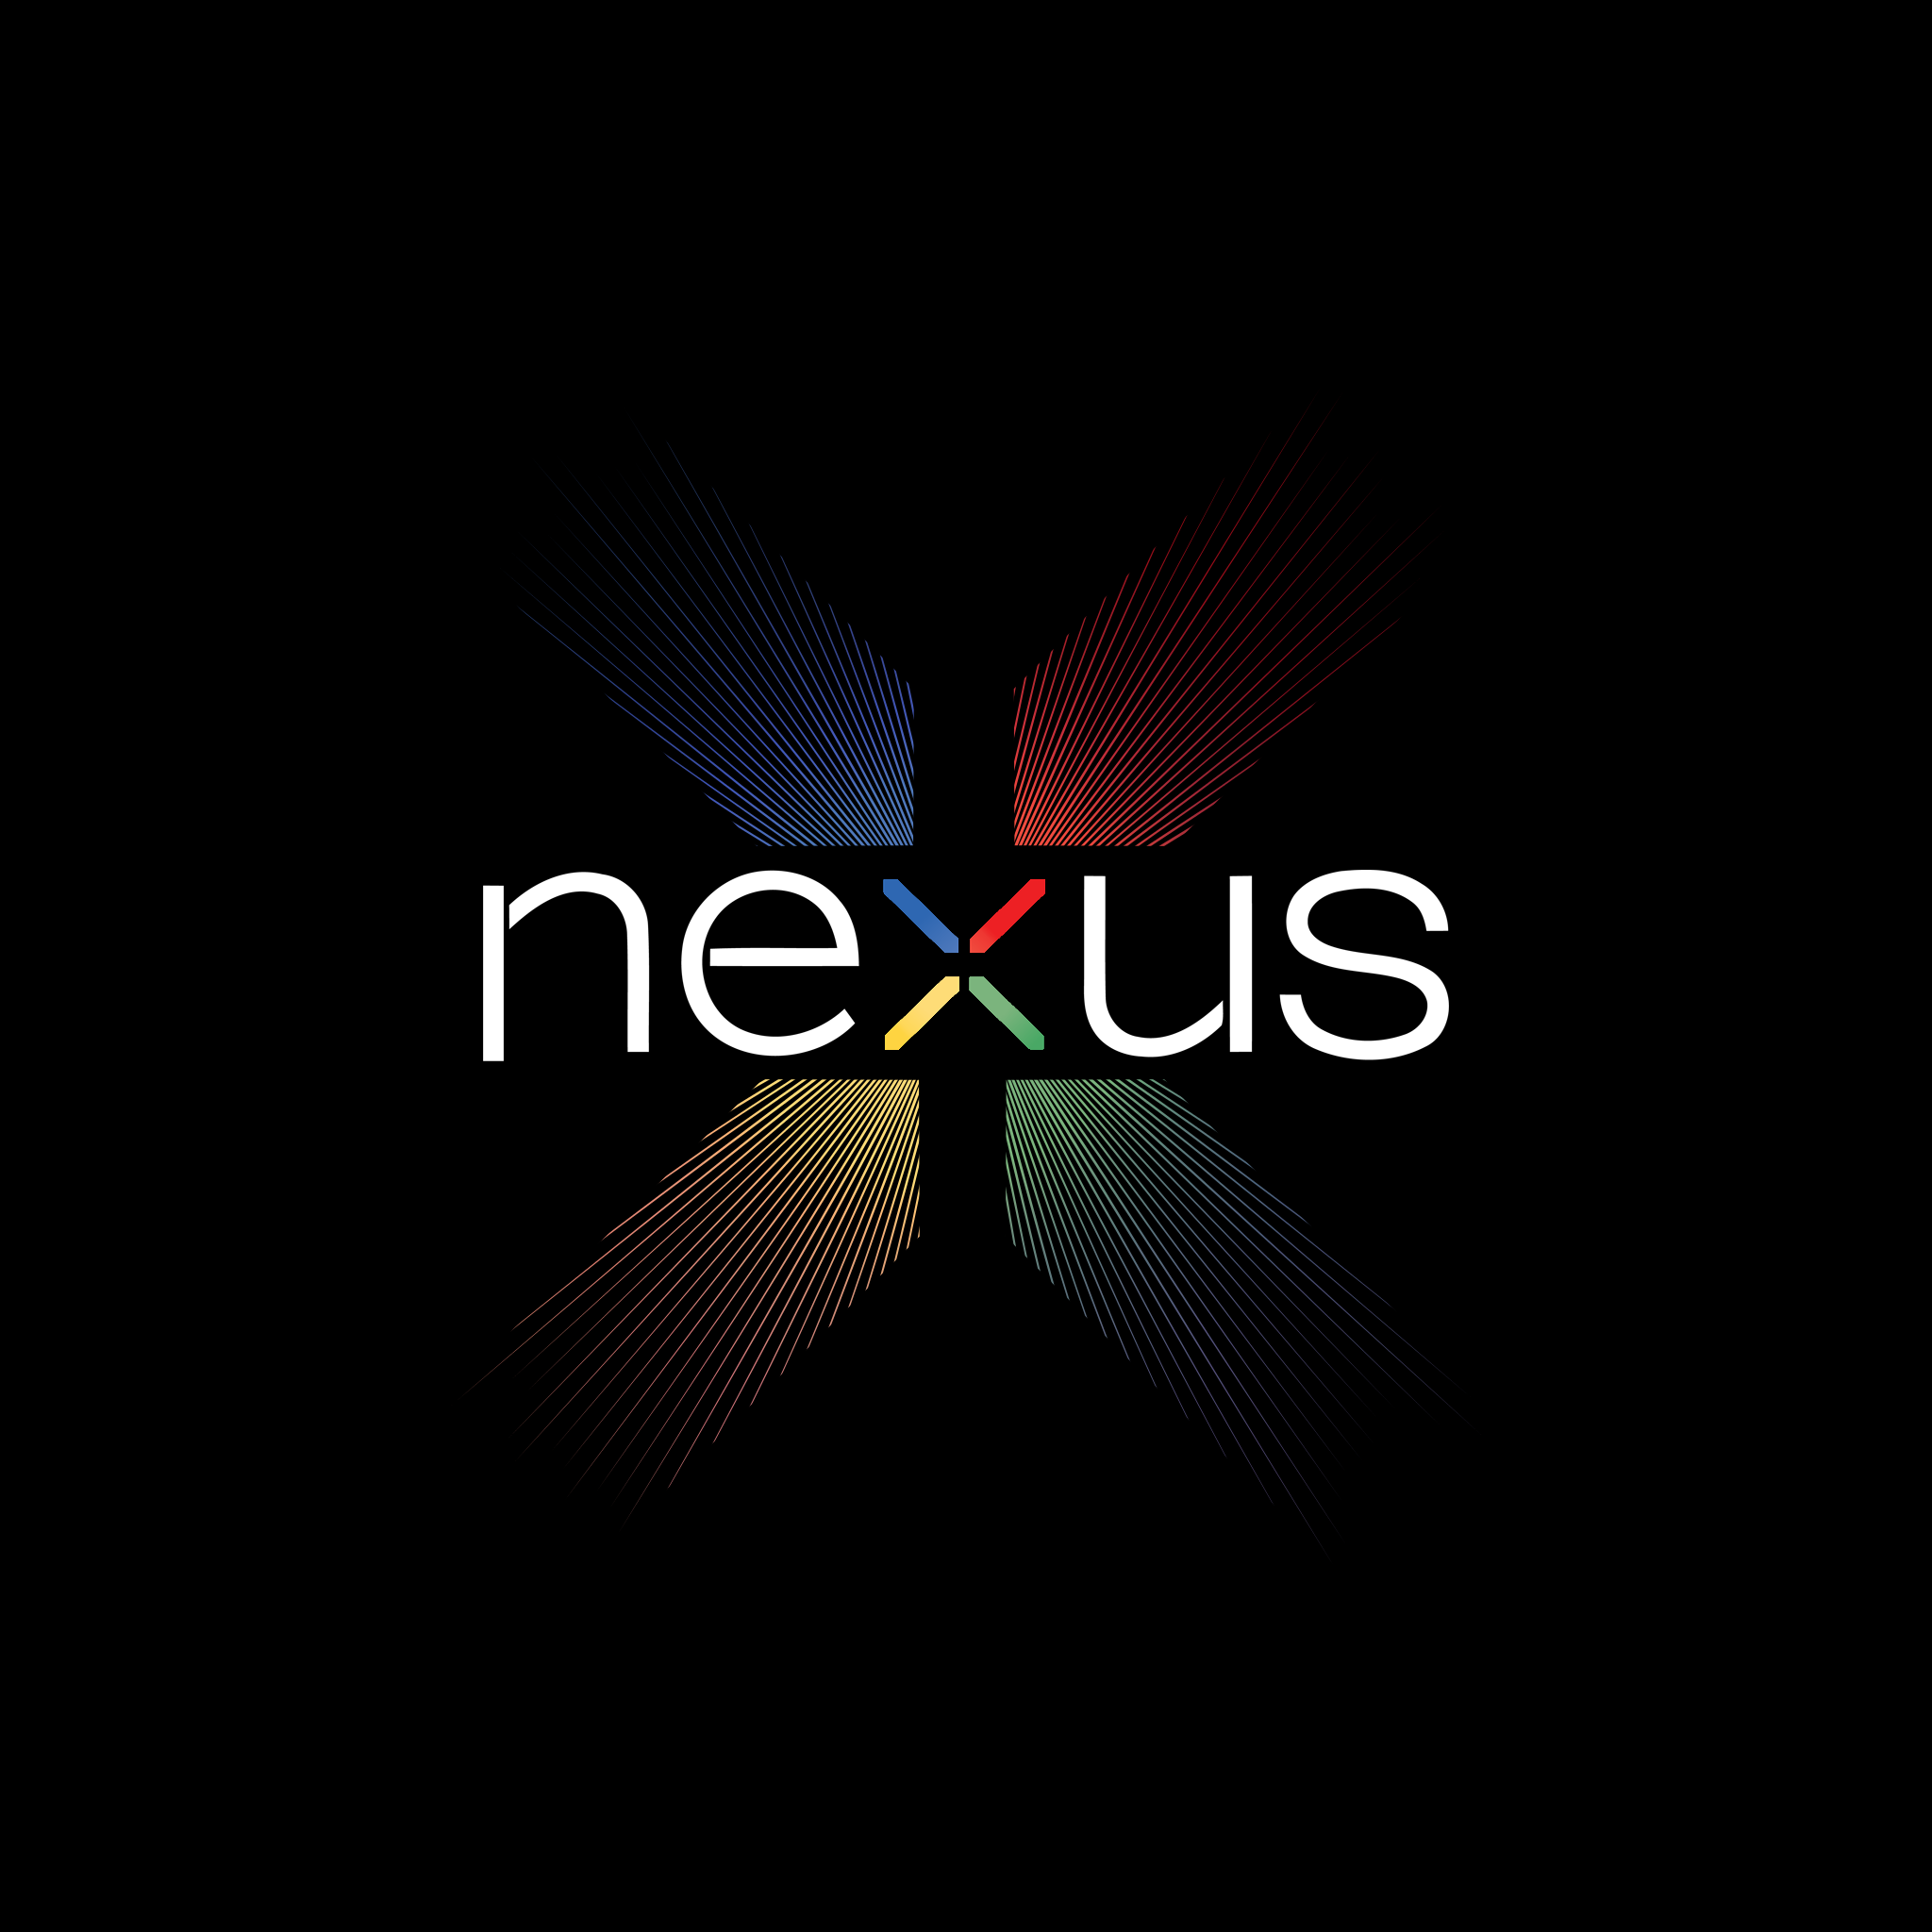 Nexus Logo Wallpaper By Pauledwards03 On Deviantart